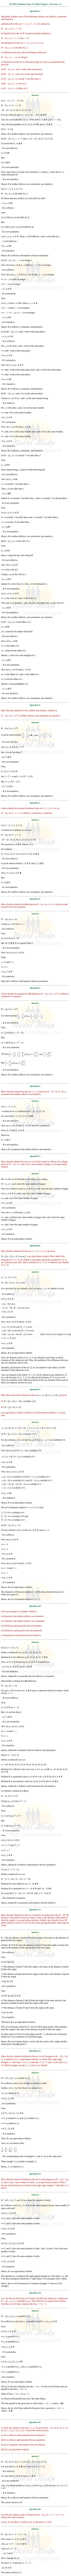 ncert solutions for class 12 Math Chapter 1 ex.1.1